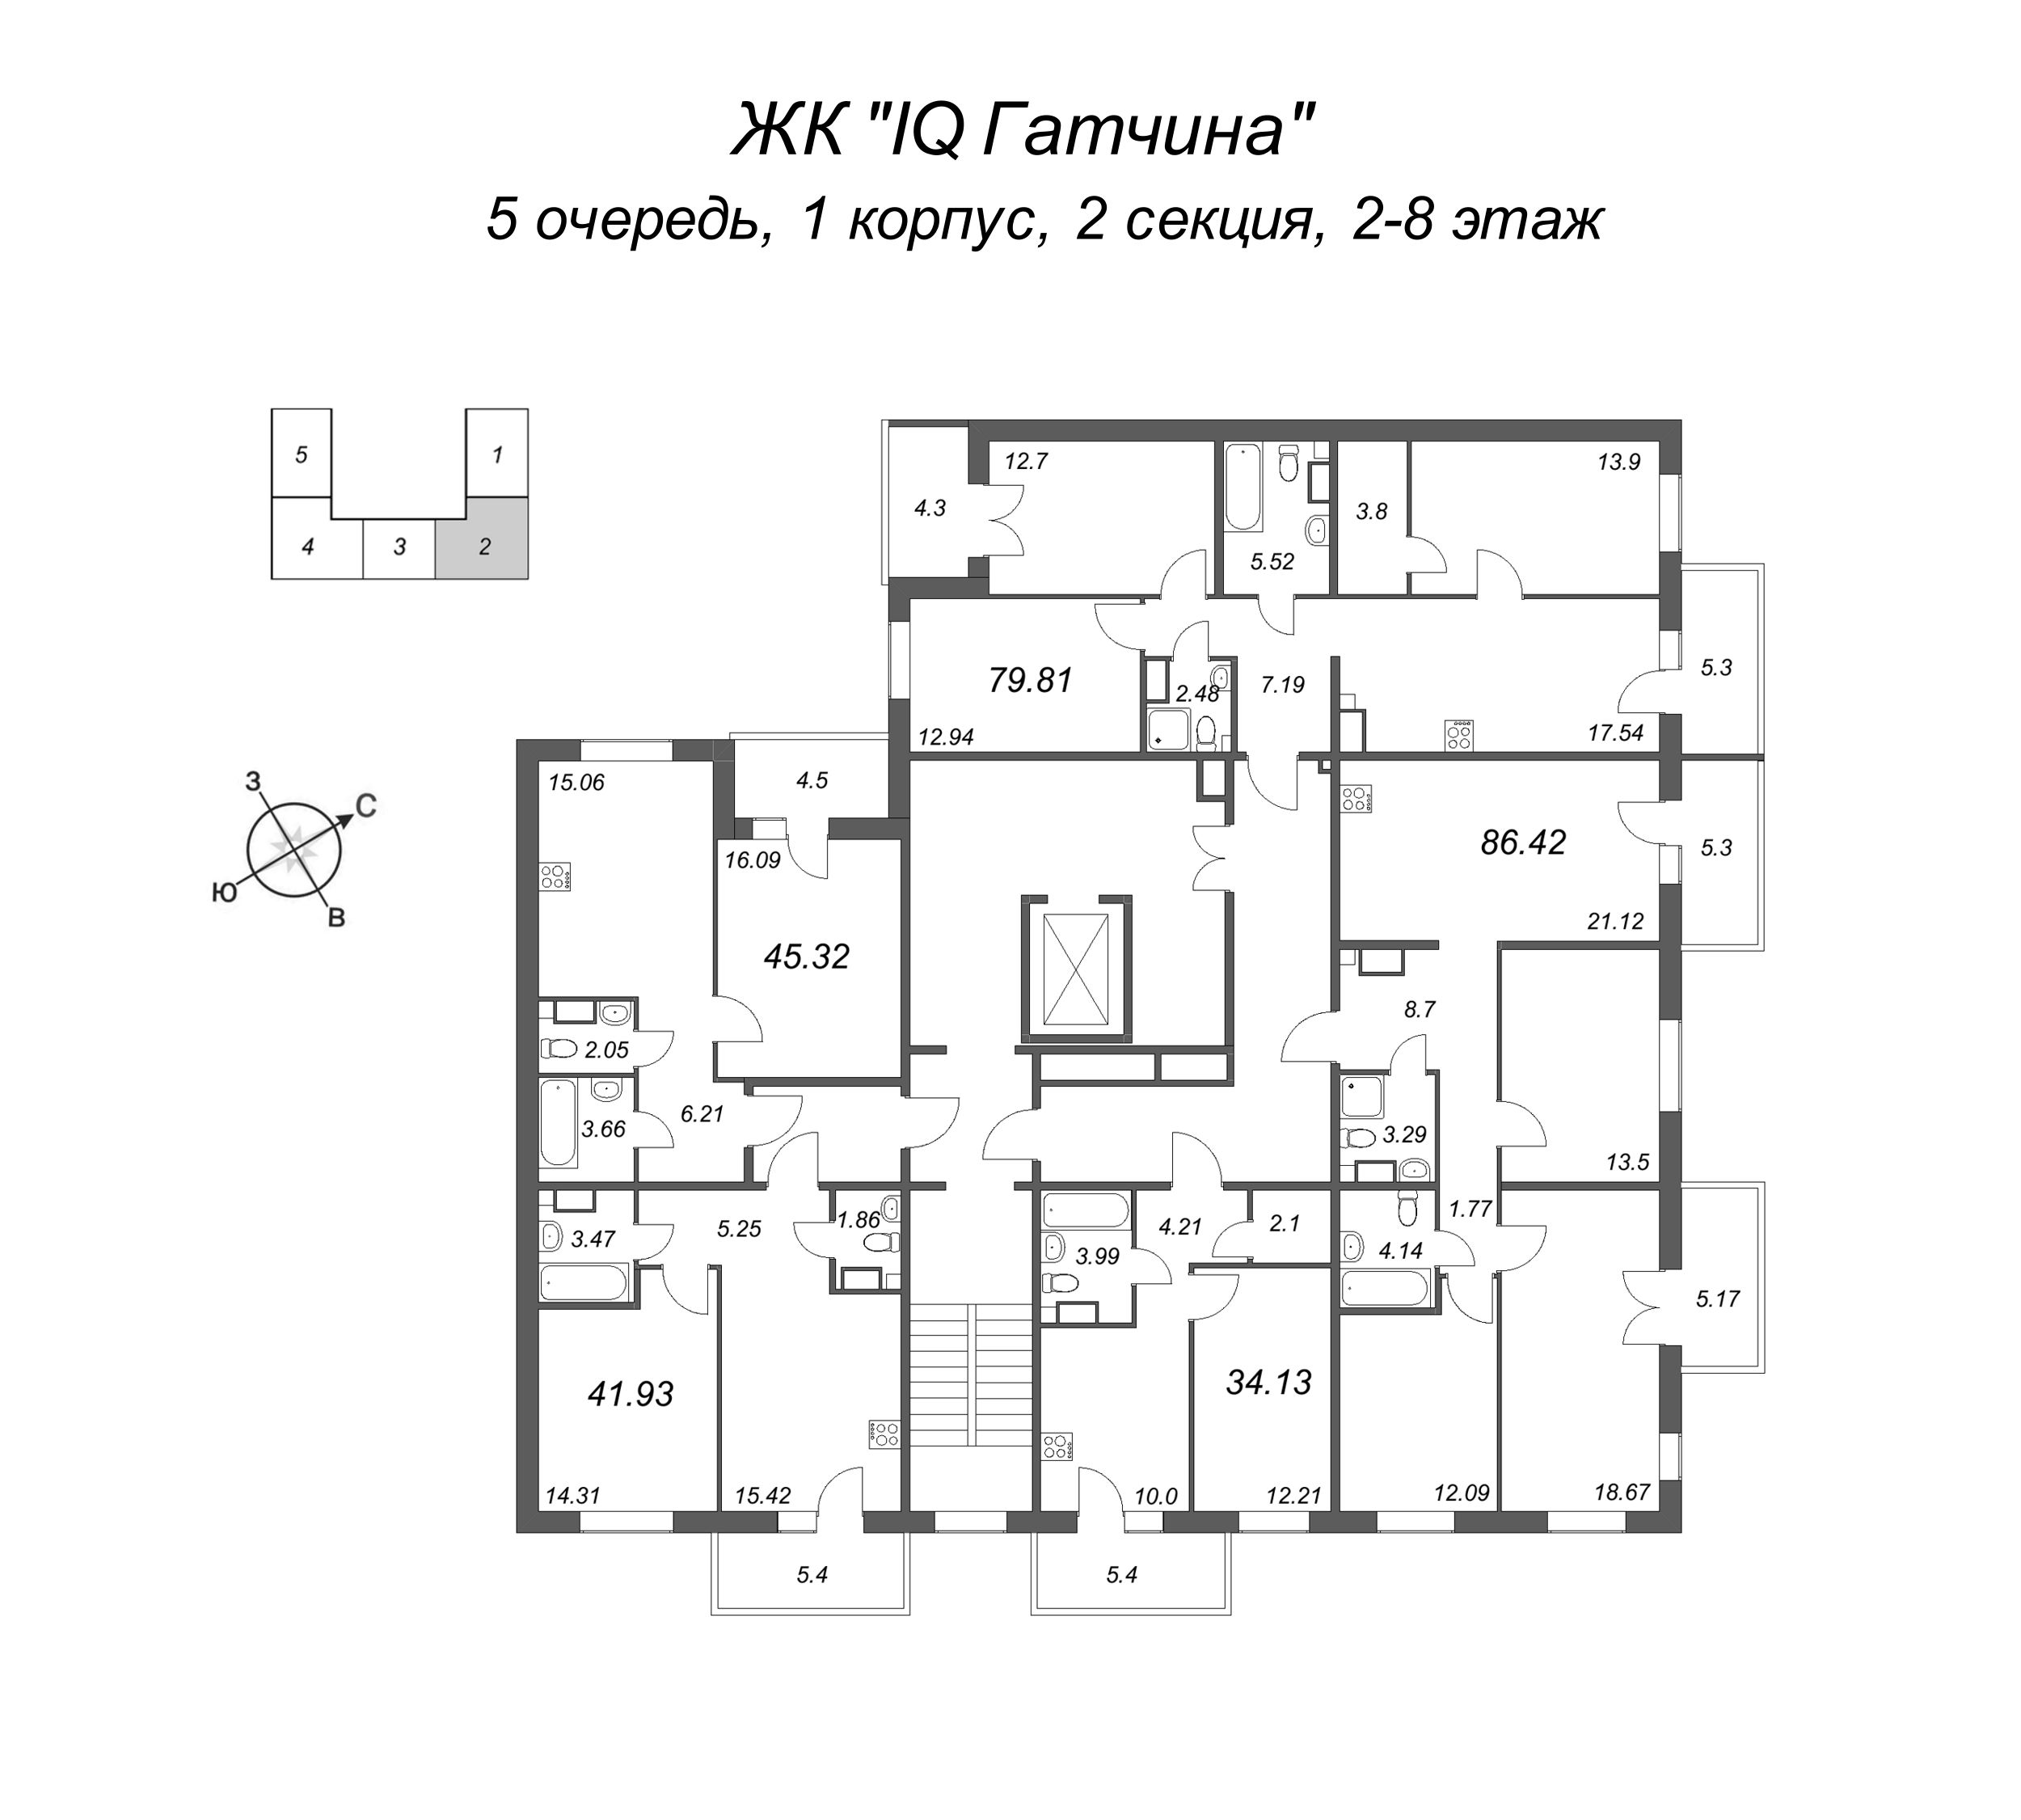 2-комнатная (Евро) квартира, 42.03 м² - планировка этажа